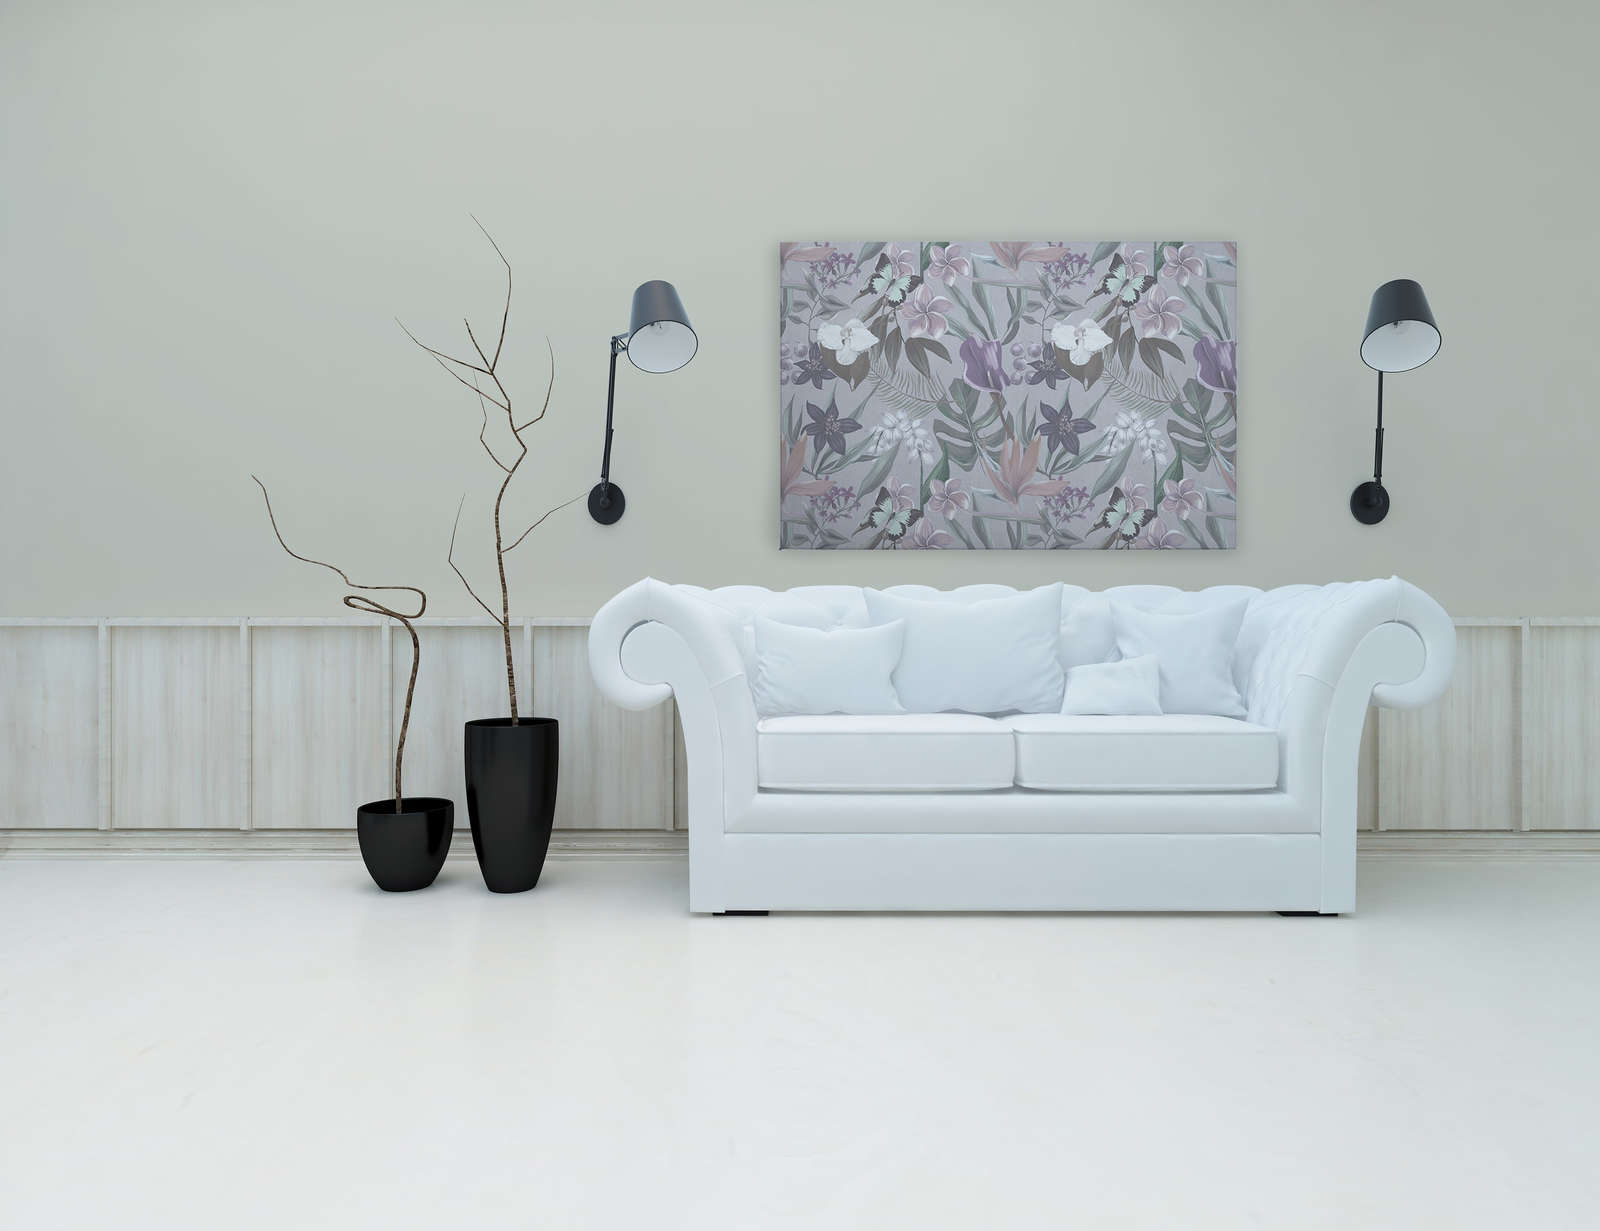             Lienzo Jungla Floral Pintura dibujada | rosa, blanco - 1,20 m x 0,80 m
        